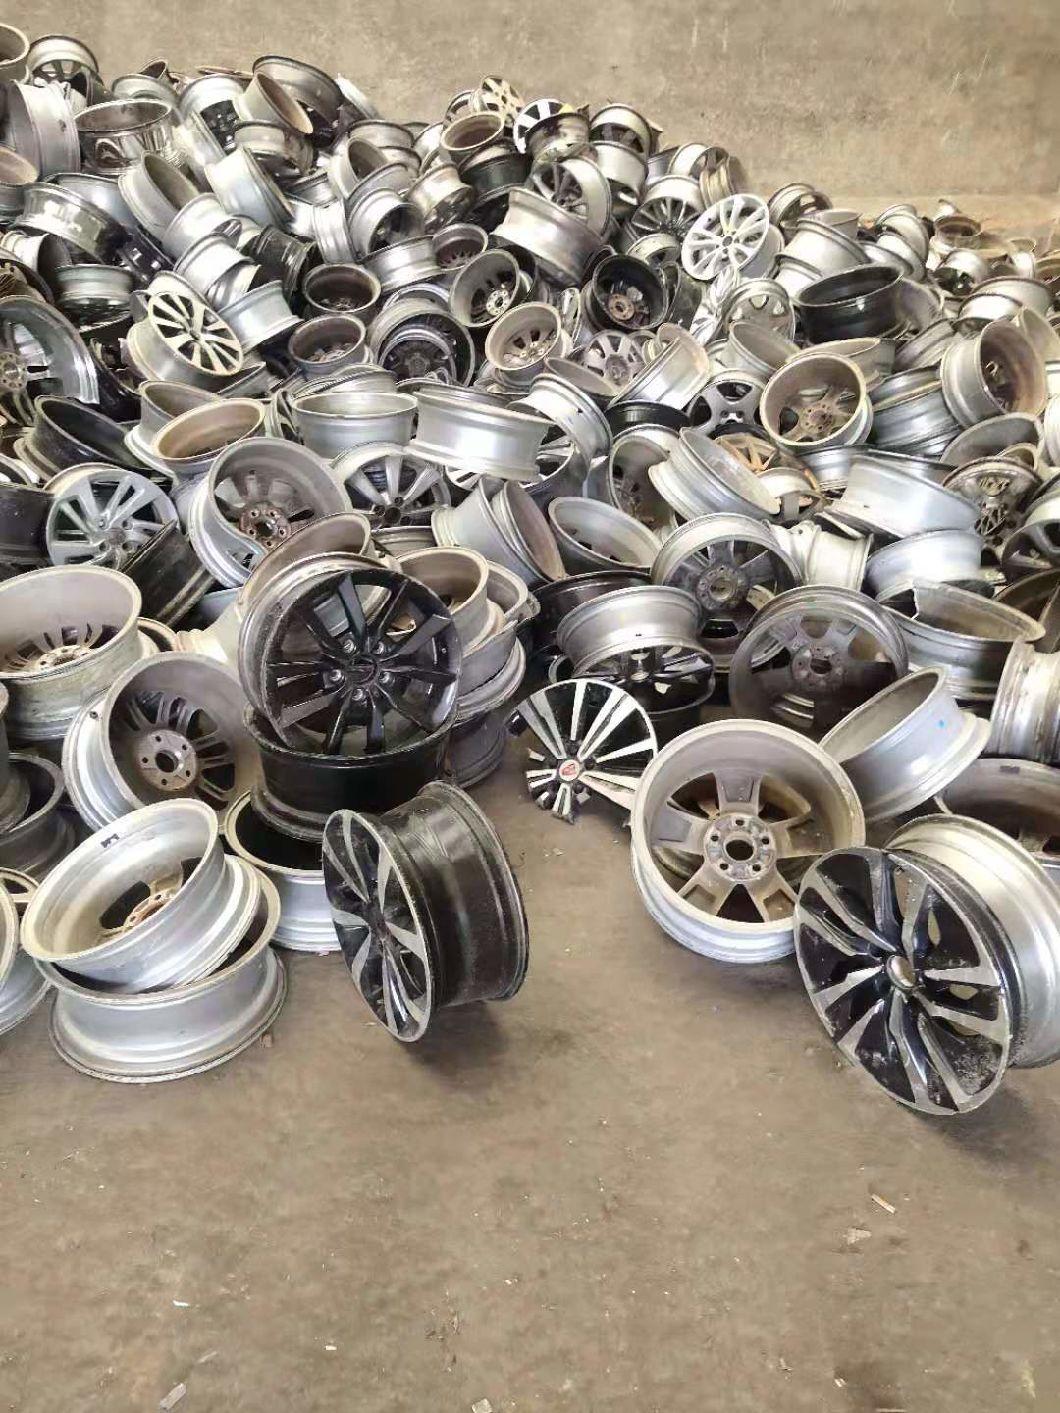 Small Profits A356 Aluminum Alloy Wheel Hub Scrap Made in China